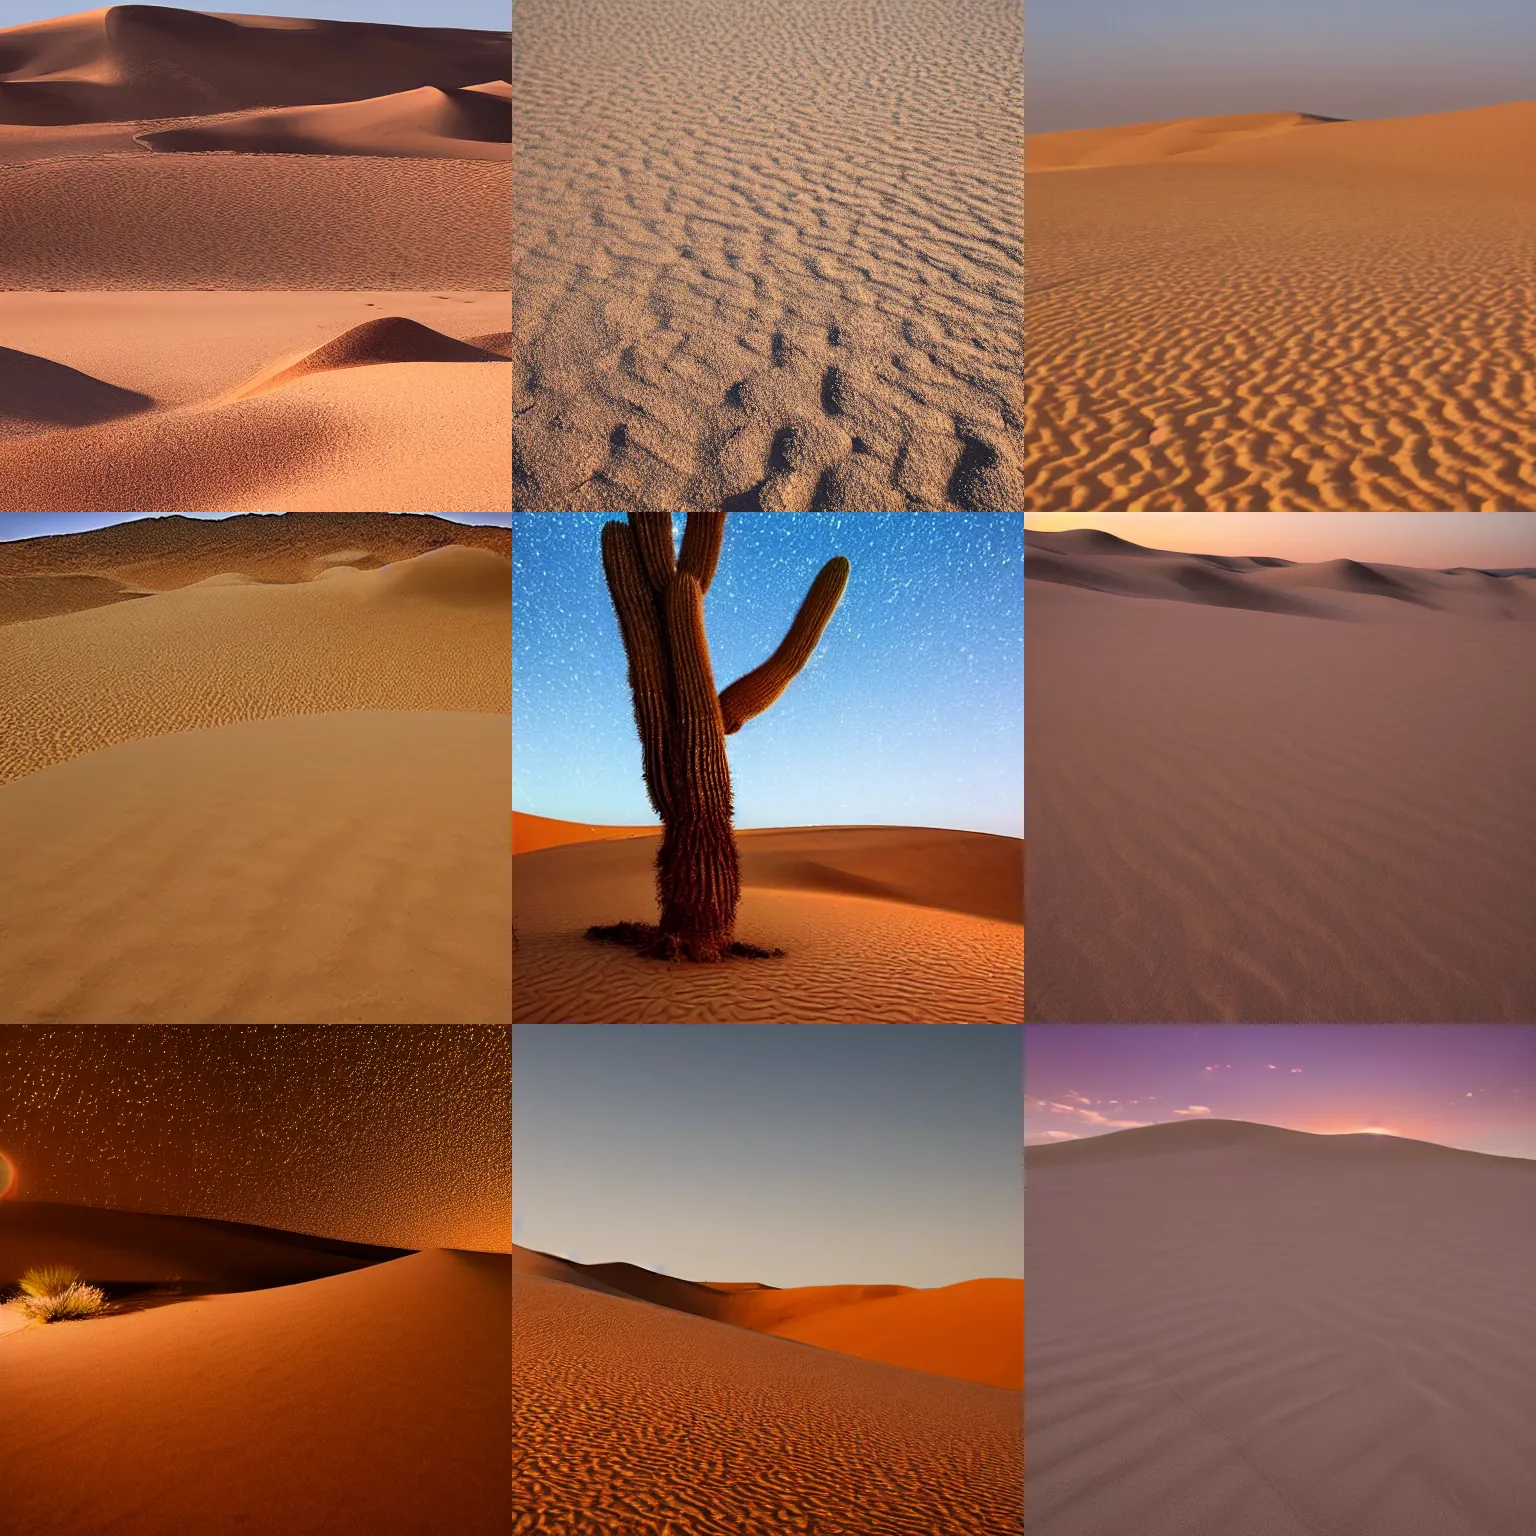 Prompt: desert sand feels warm at night